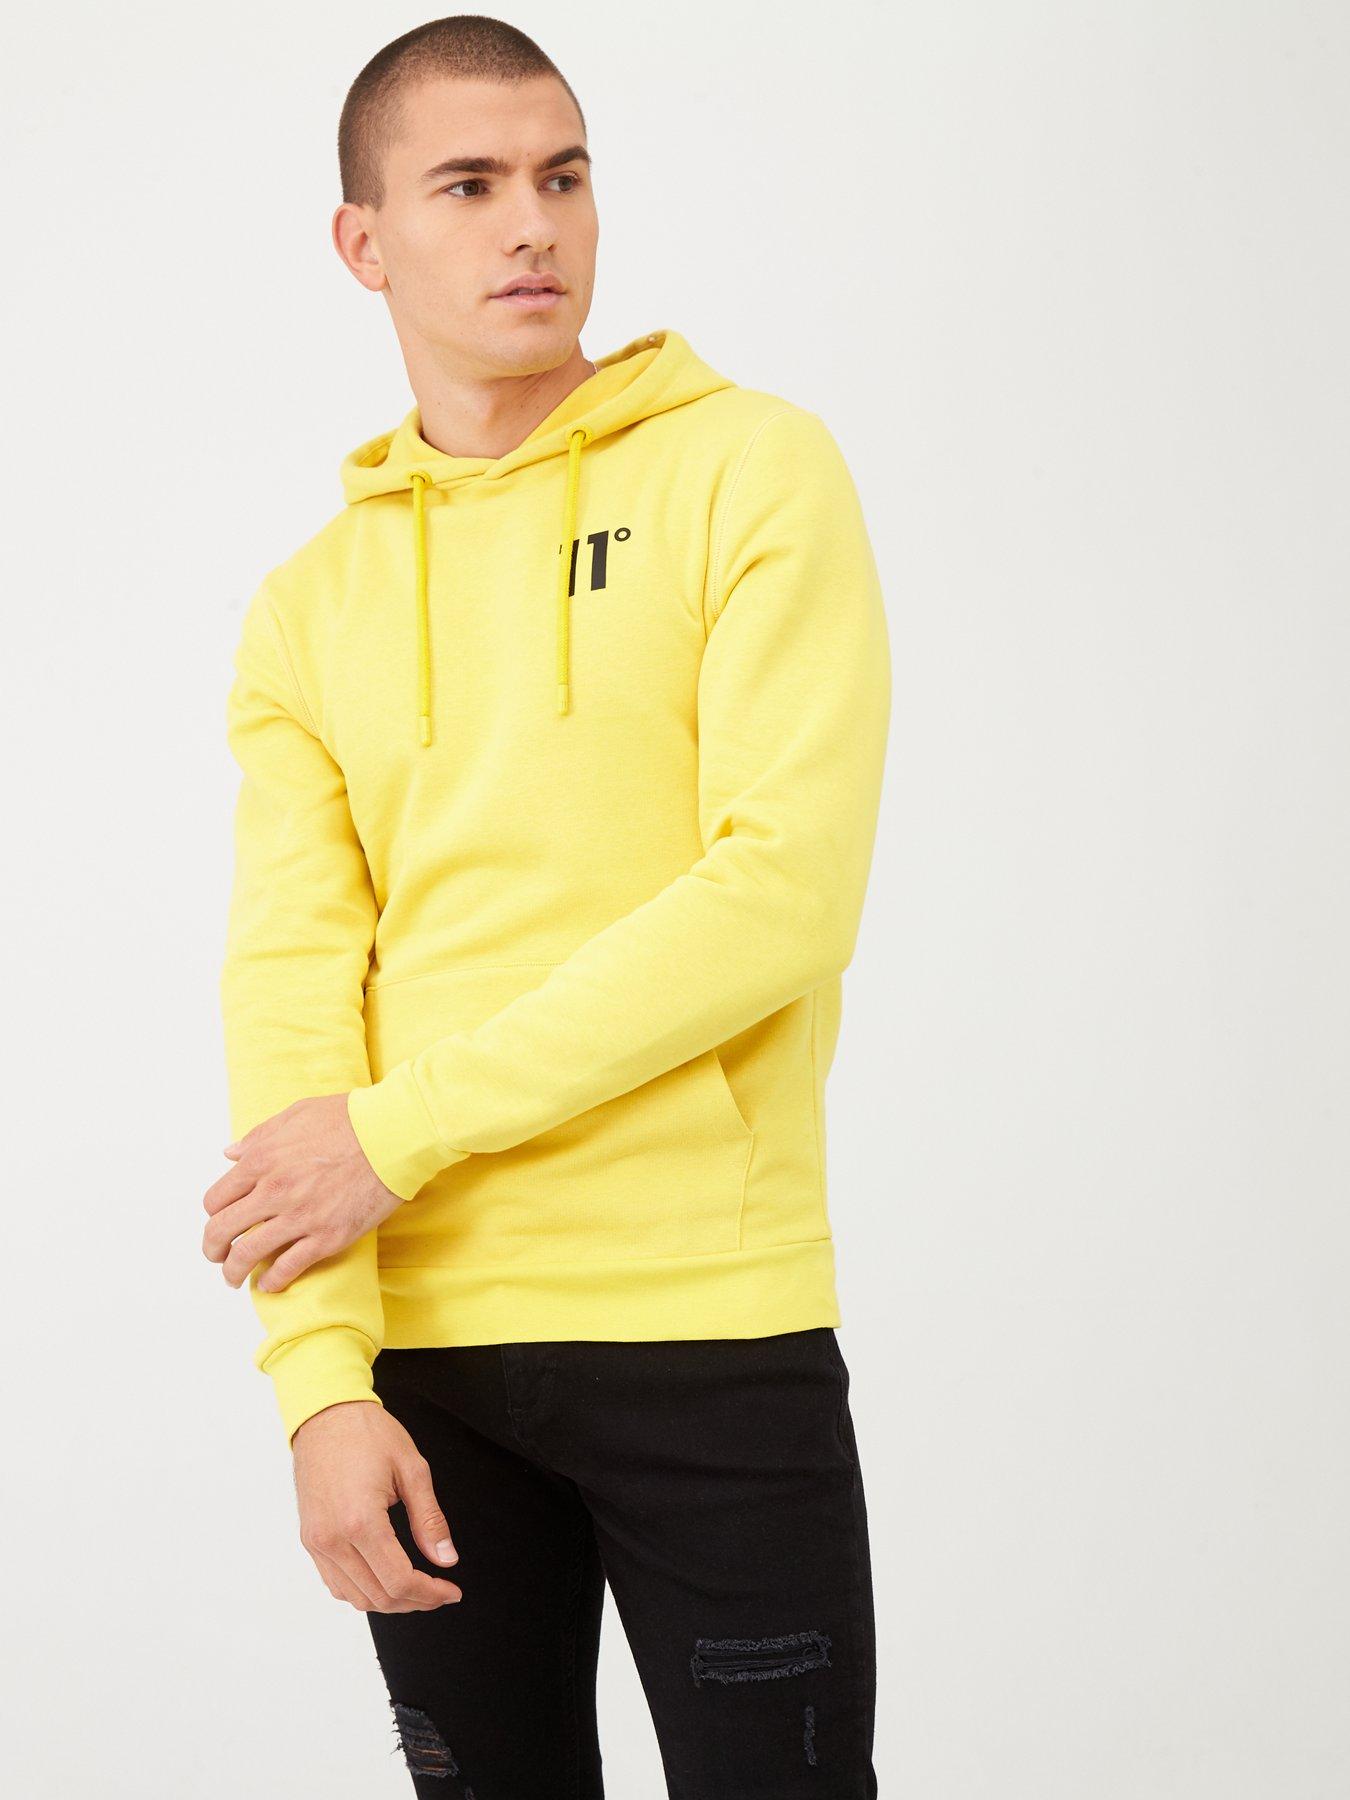 11 degrees yellow hoodie